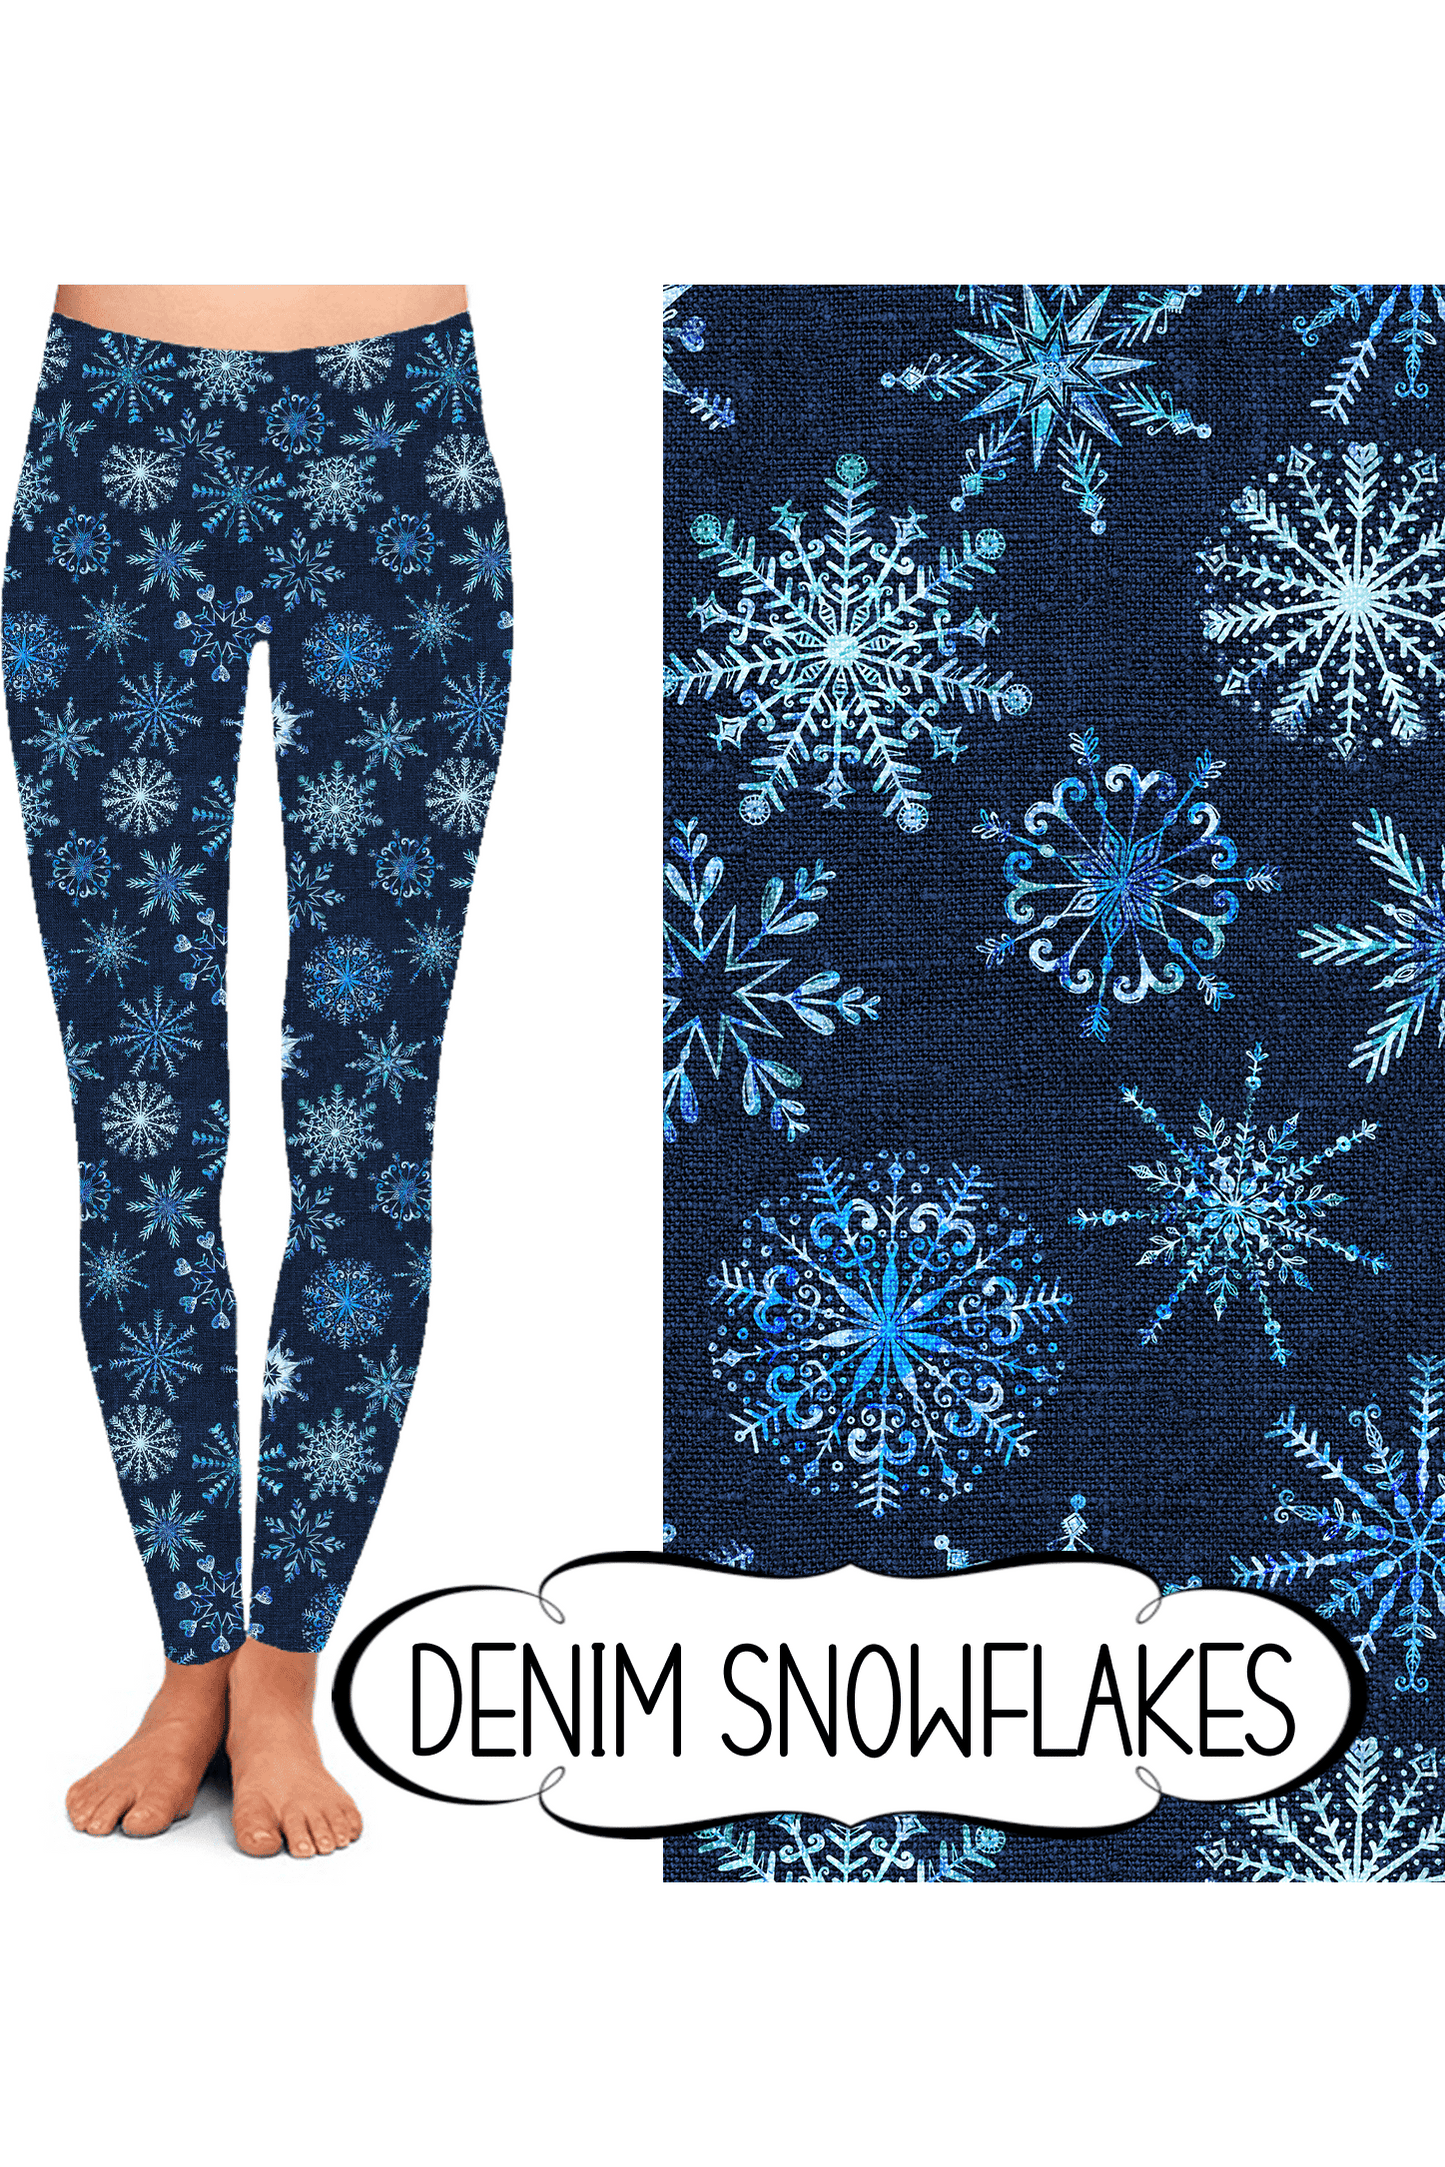 Yoga Style Leggings - Denim Snowflakes by Eleven & Co.